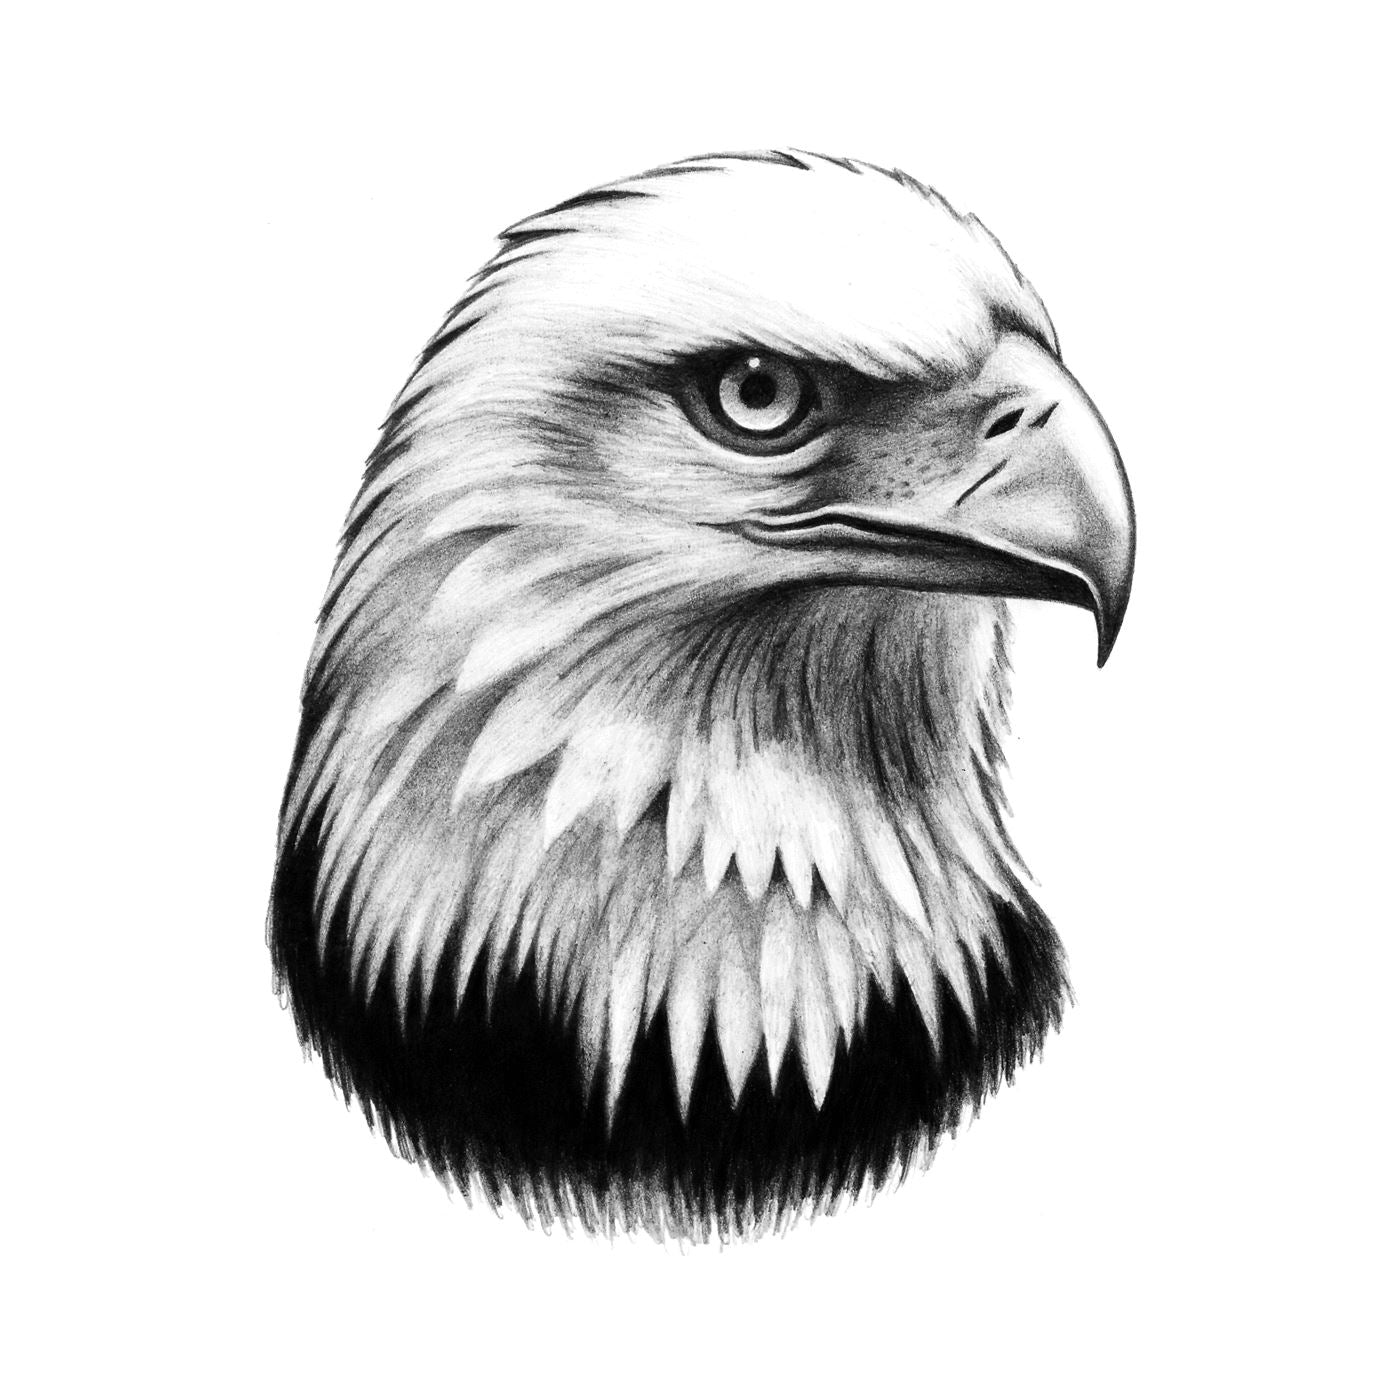 american eagle tattoos black and white